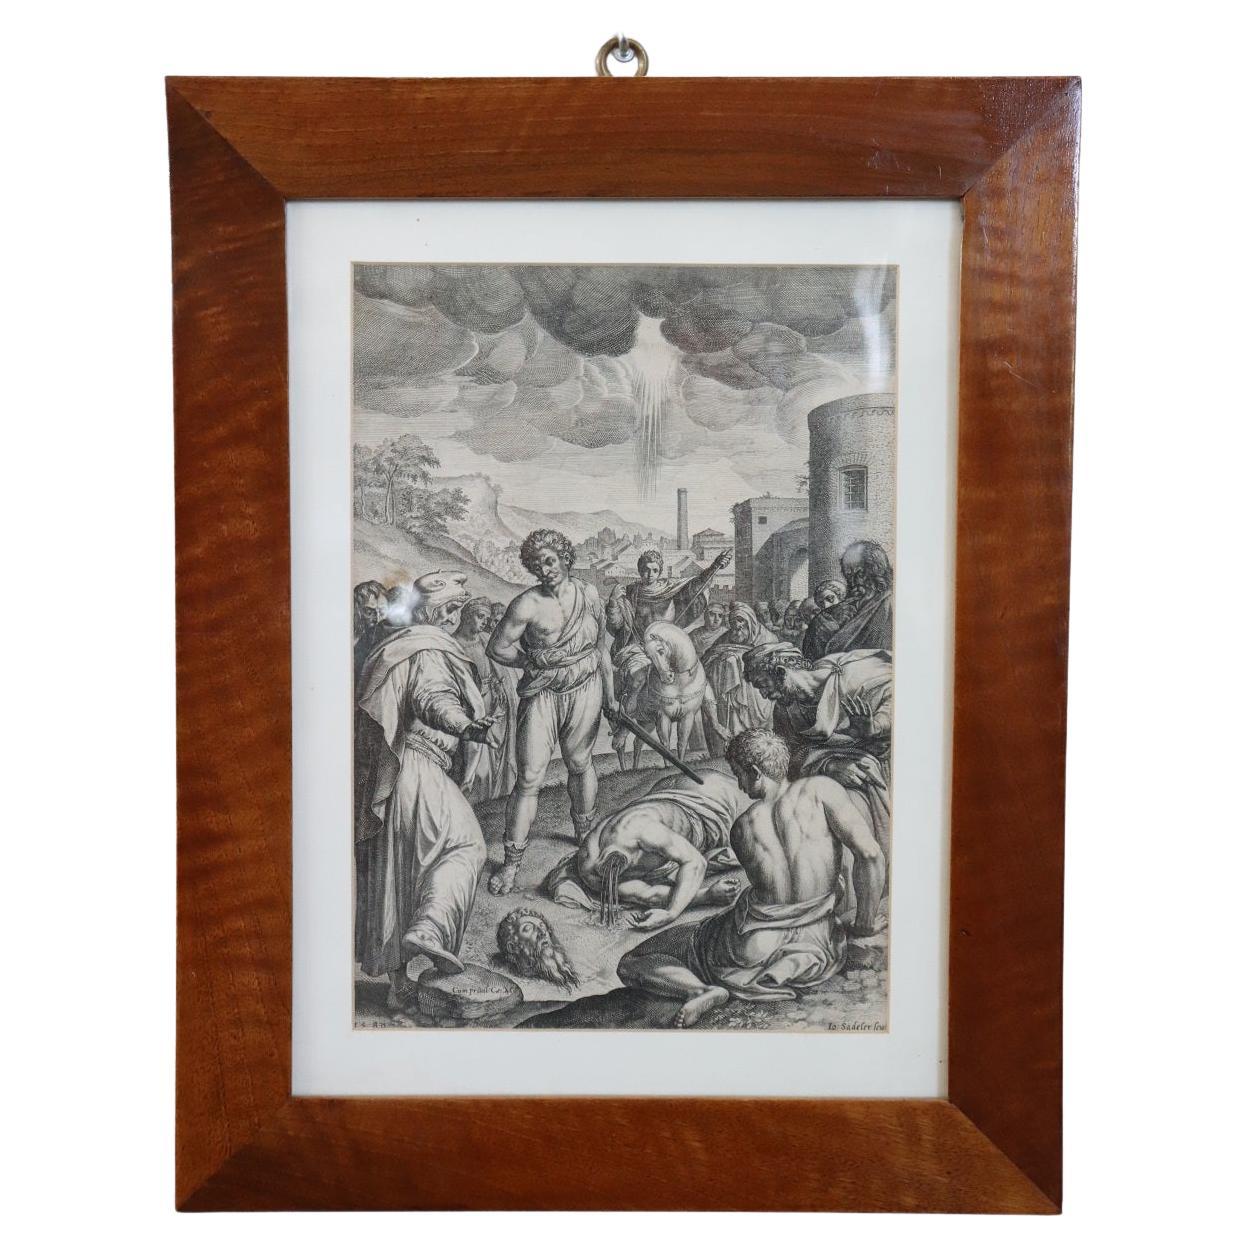 16th Century Antique Engraving by Sadeler Johann I "The beheading of St. Paul"